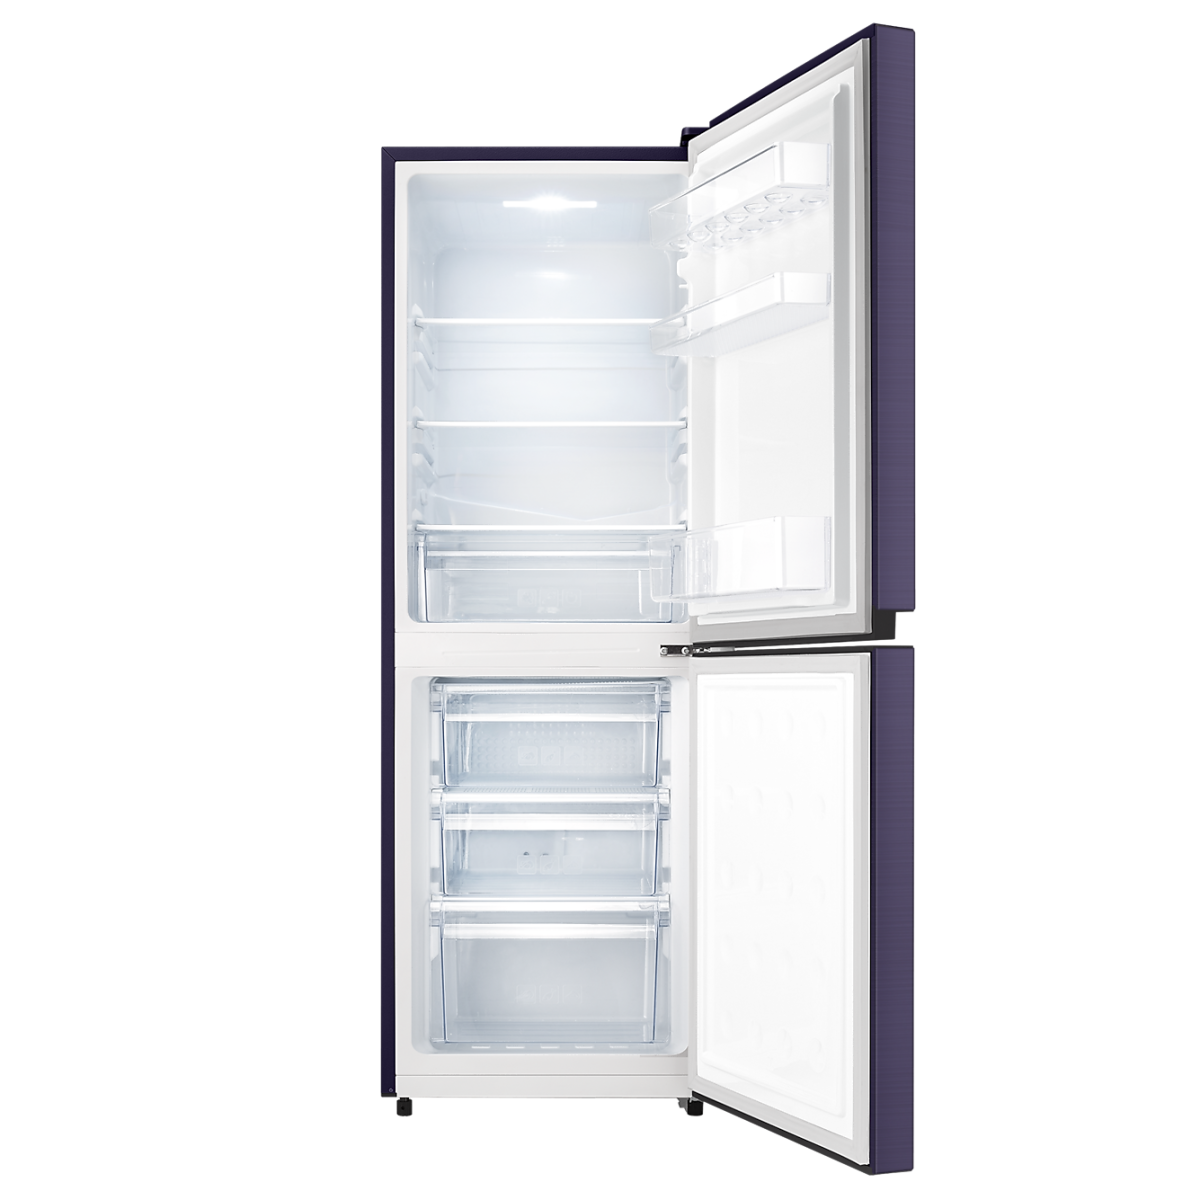 SAMSUNG 218 Liter Refrigerator with Digtial Inverter Technology RB21KMFH5UT/D3 , Best Refrigerators of Year, Top-rated Refrigerators, Refrigerator Reviews, Refrigerator Comparison, Buying a Refrigerator Guide, Refrigerator Deals and Offers